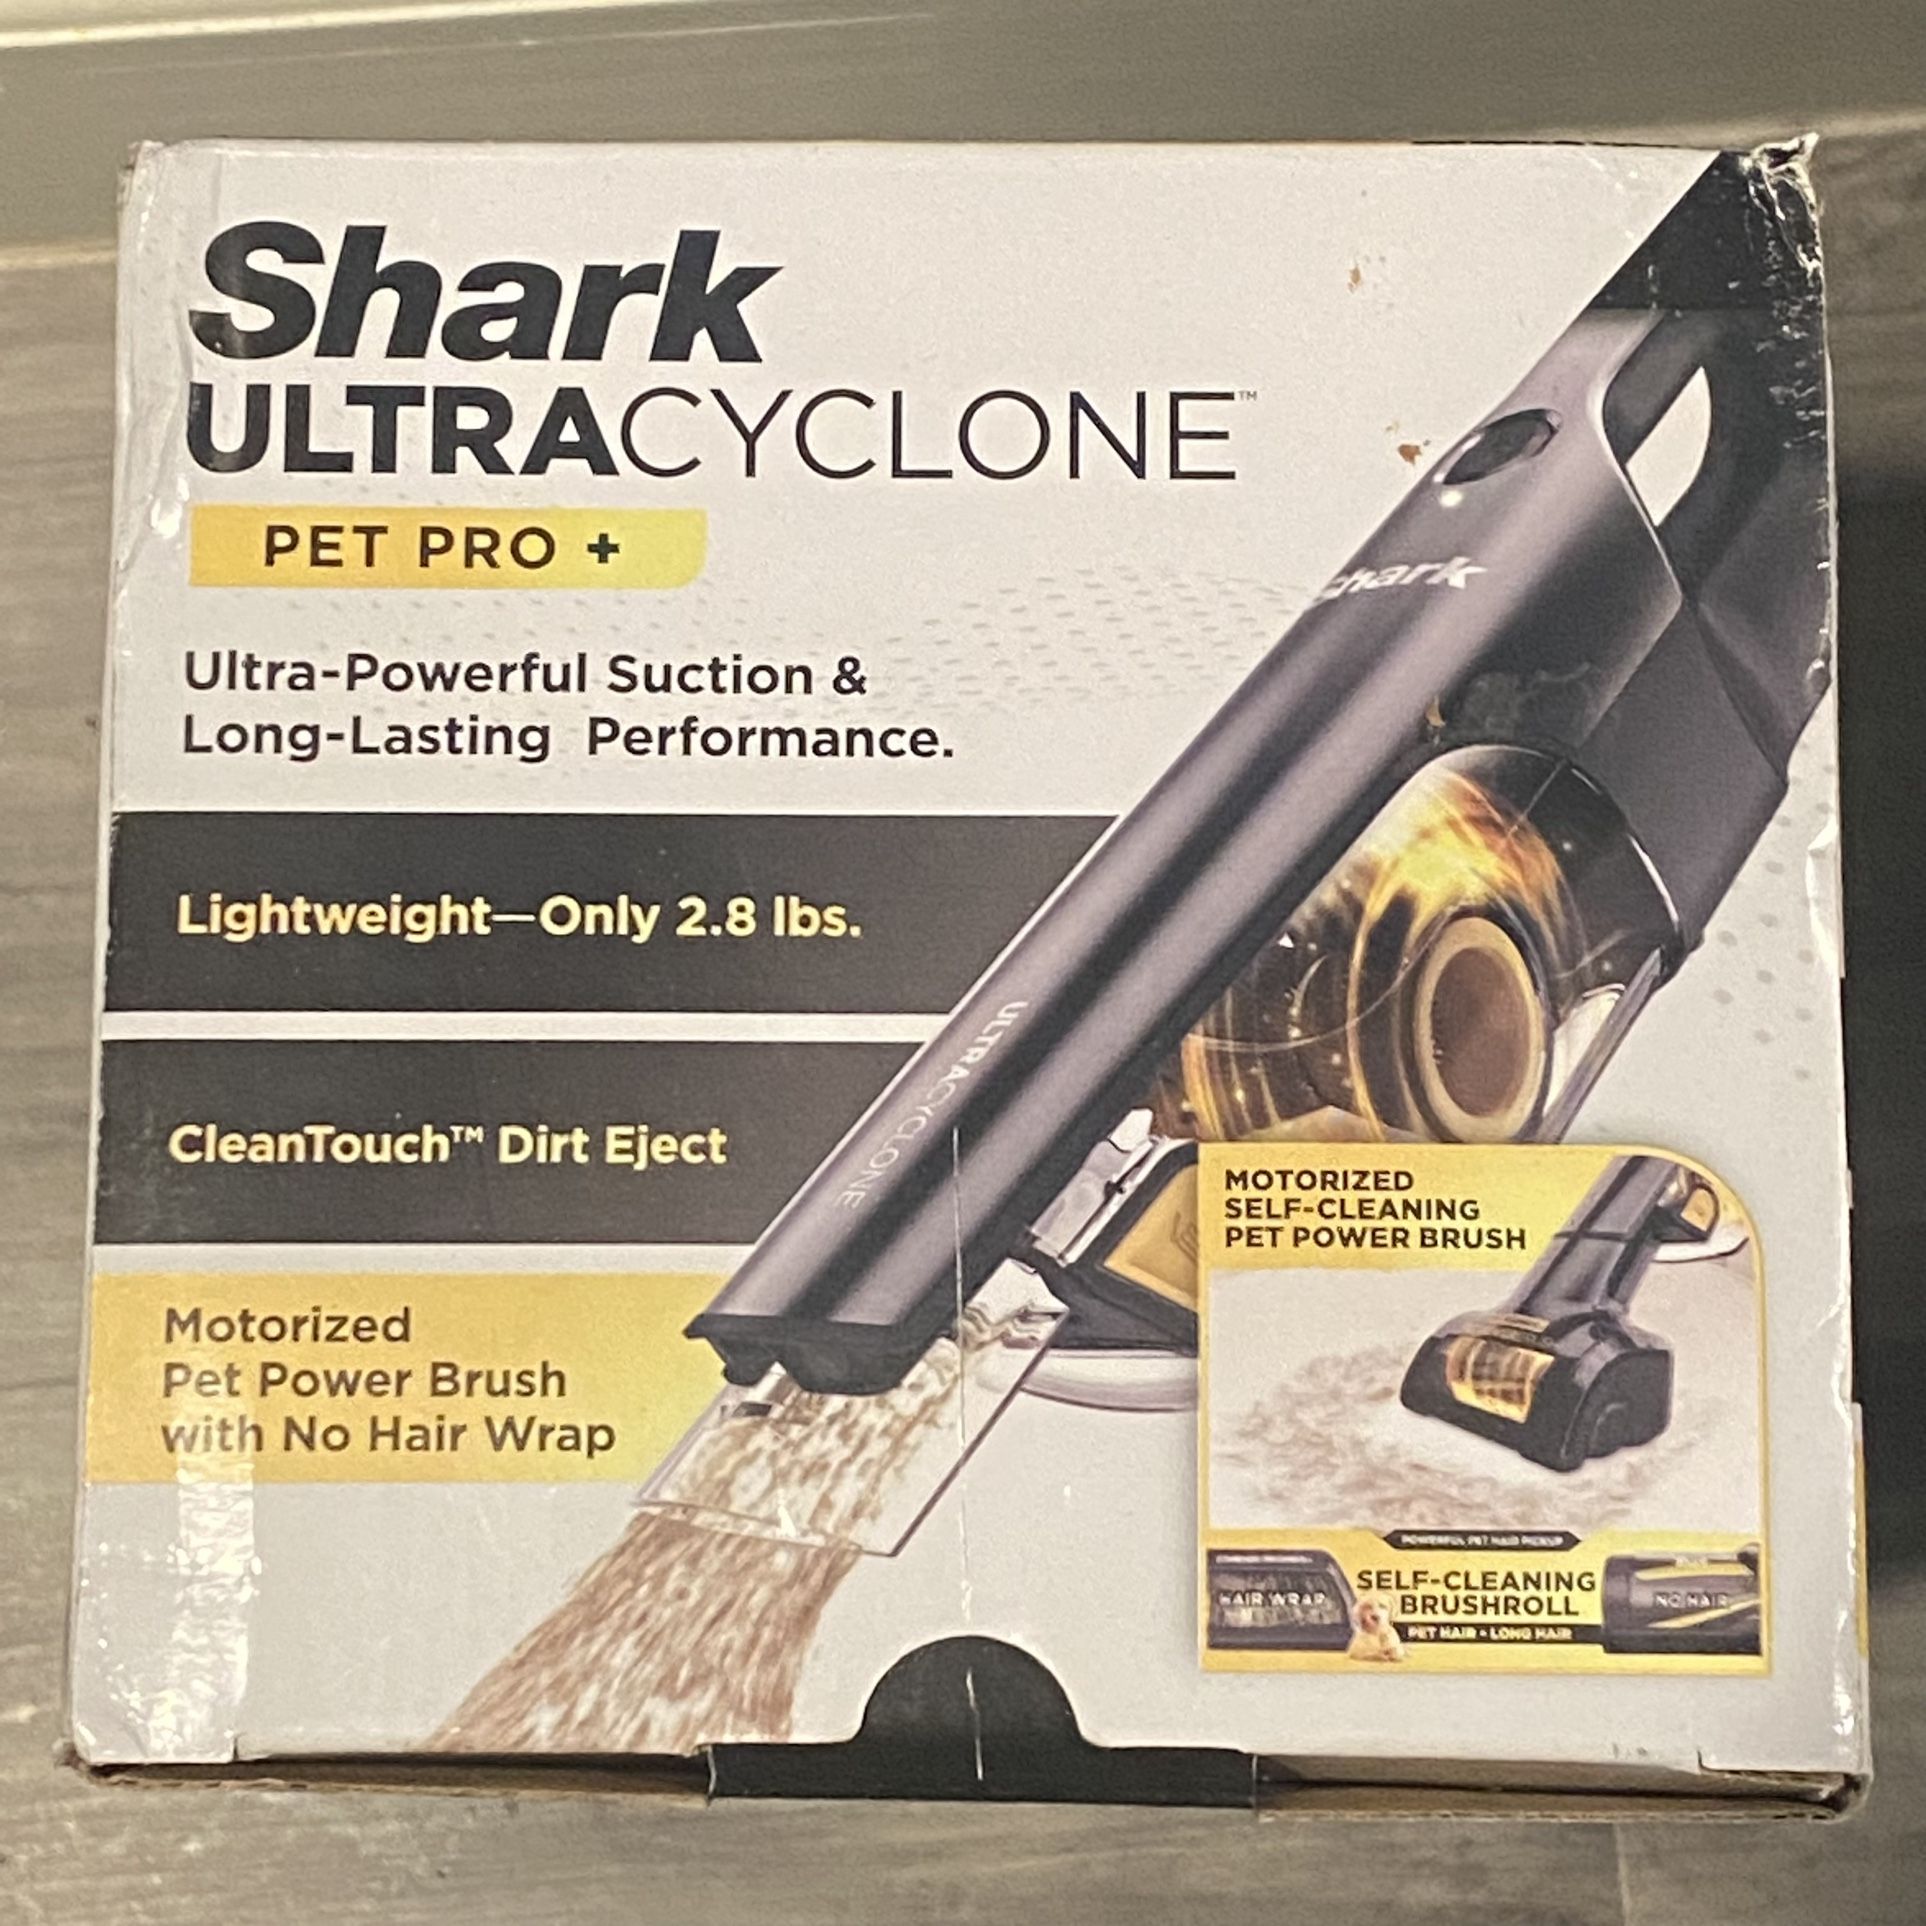 Shark Ultra Cyclone, Pet Pro Plus